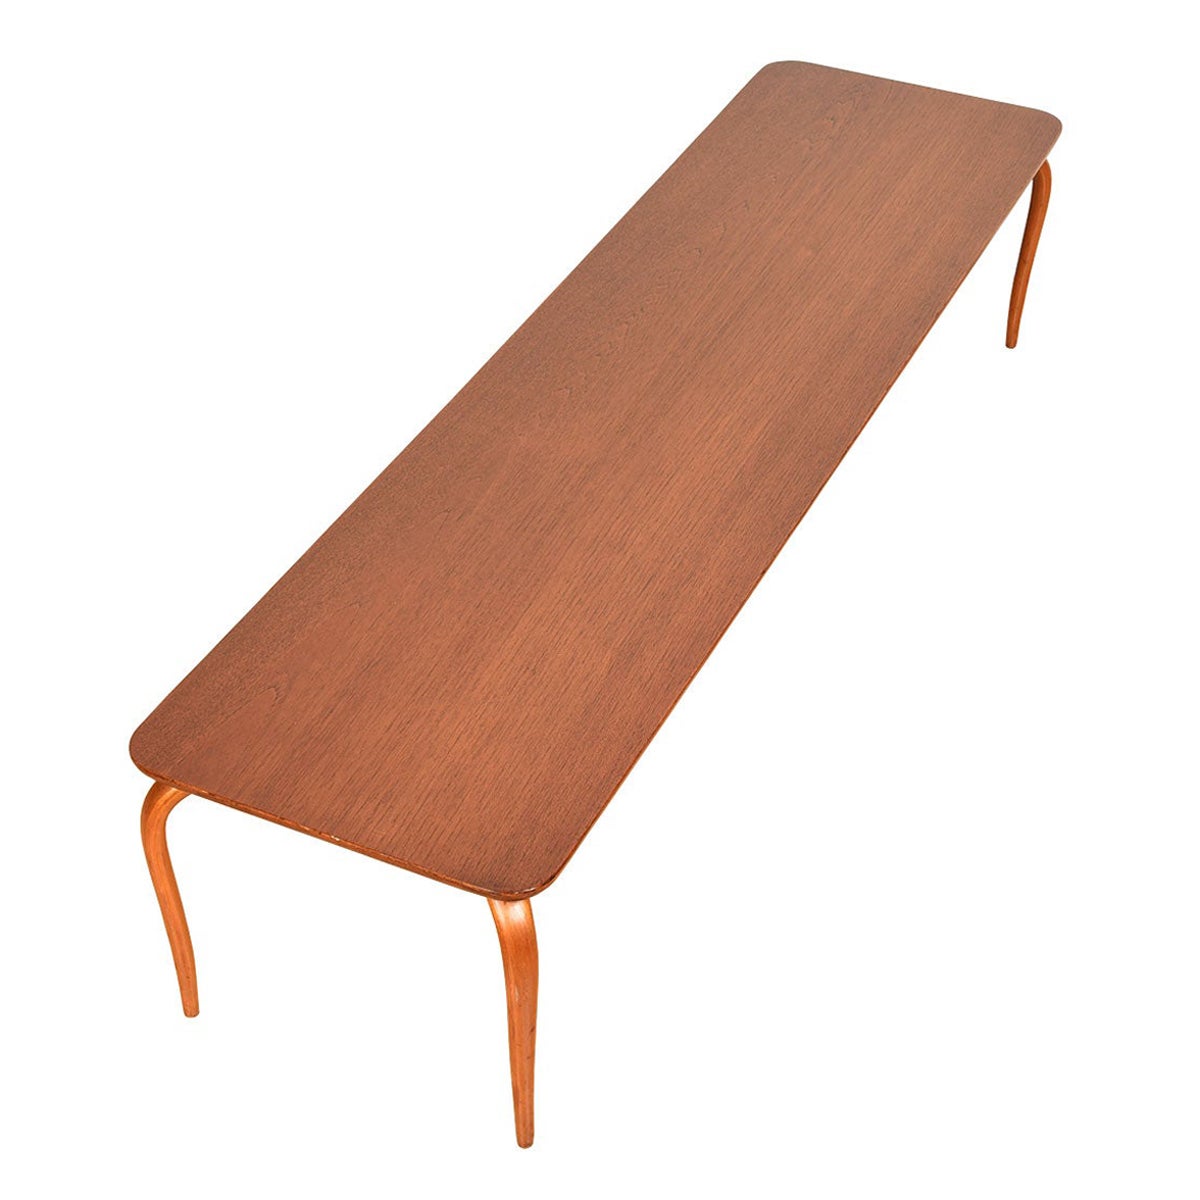 ‘Long Table’ Swedish Modern Organic-Leg Coffee Table by Bruno Mathsson, 1950s For Sale